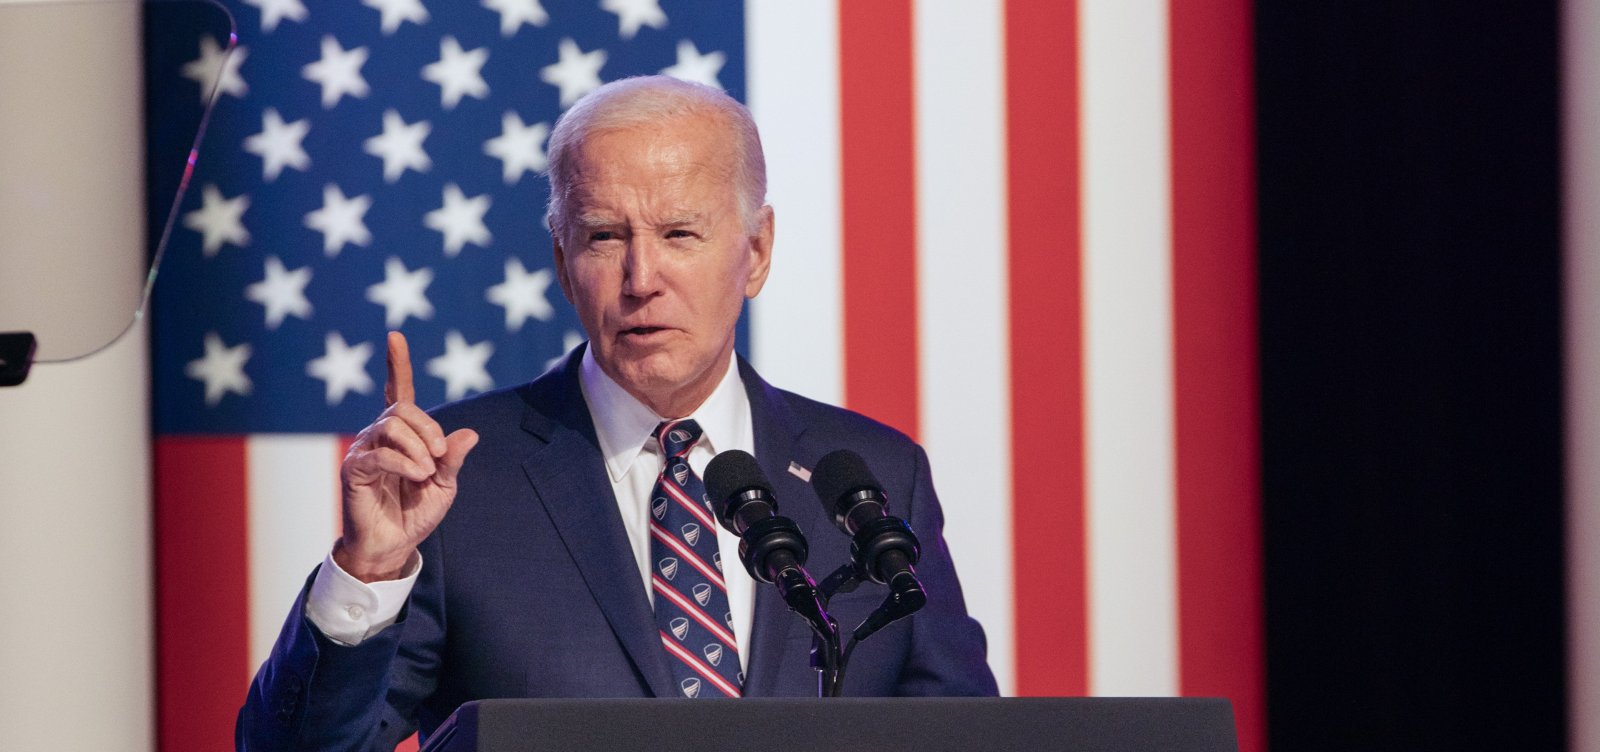 Durante entrevista, Biden diz que seu desempenho no debate foi um “episódio ruim”